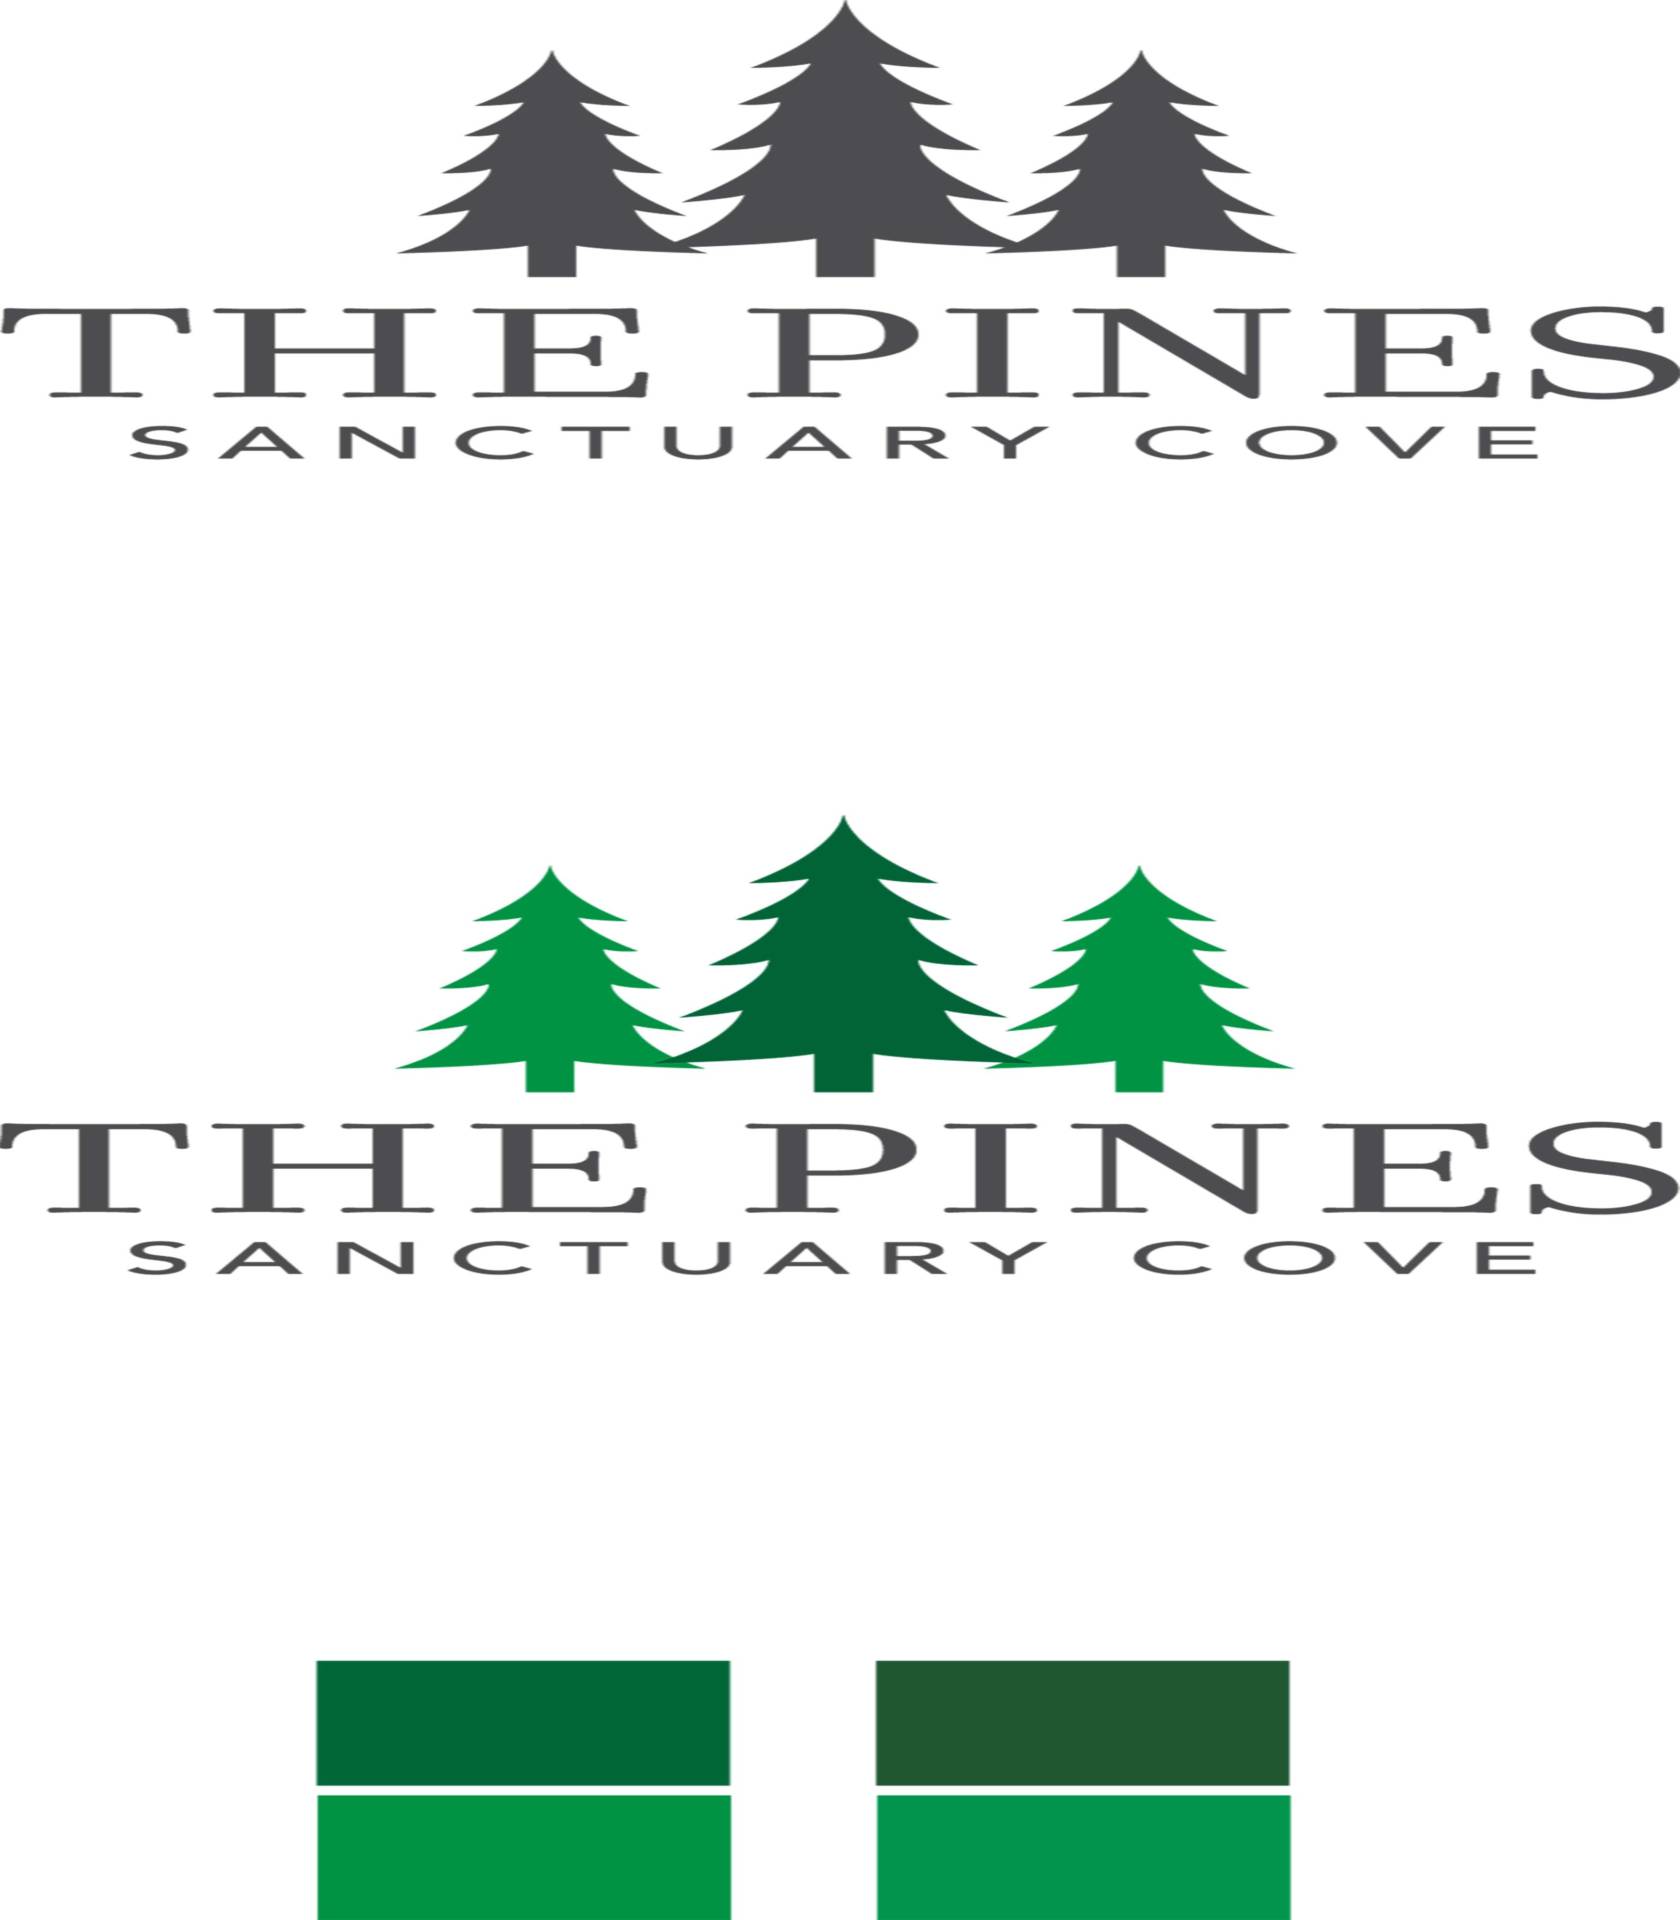 Sanctuary Cove [The Pines]